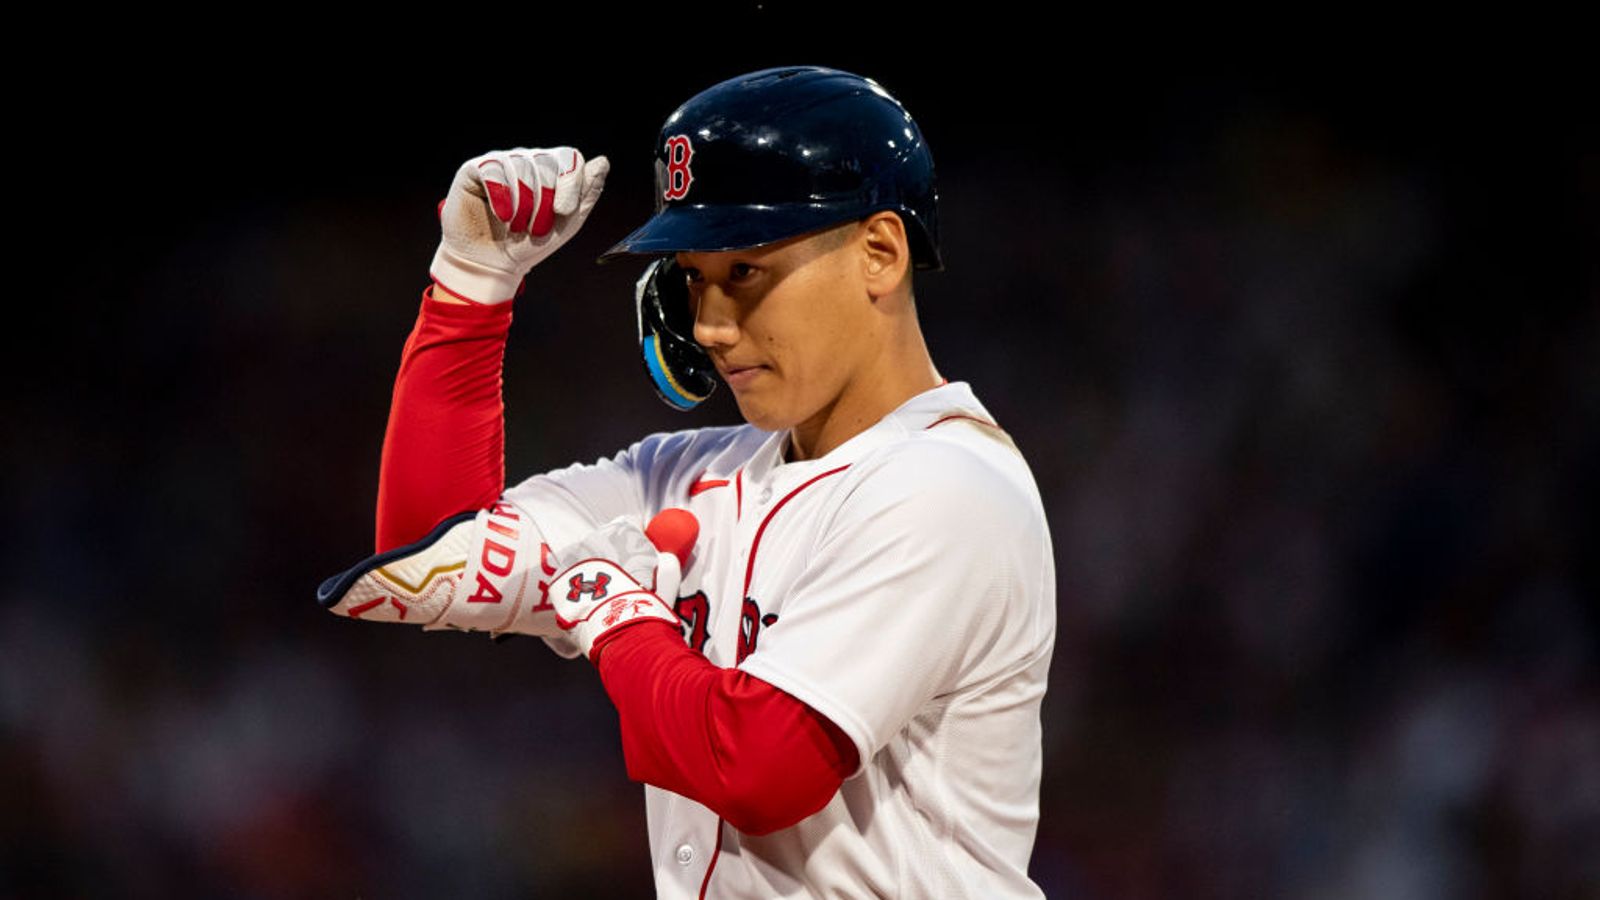 Boston Red Sox MLB Dog Shirt exclusive at The Honest Dog